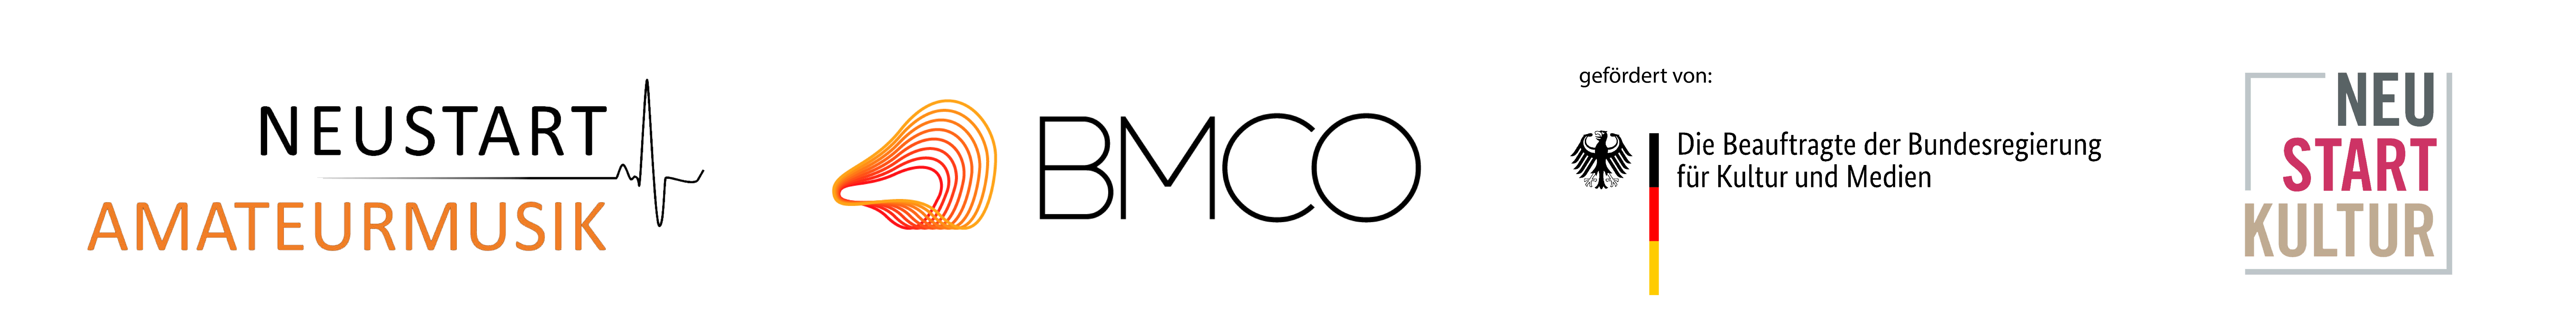 Logos BKM BMCO Neustart-Kultur Neustart-Amateurmusik